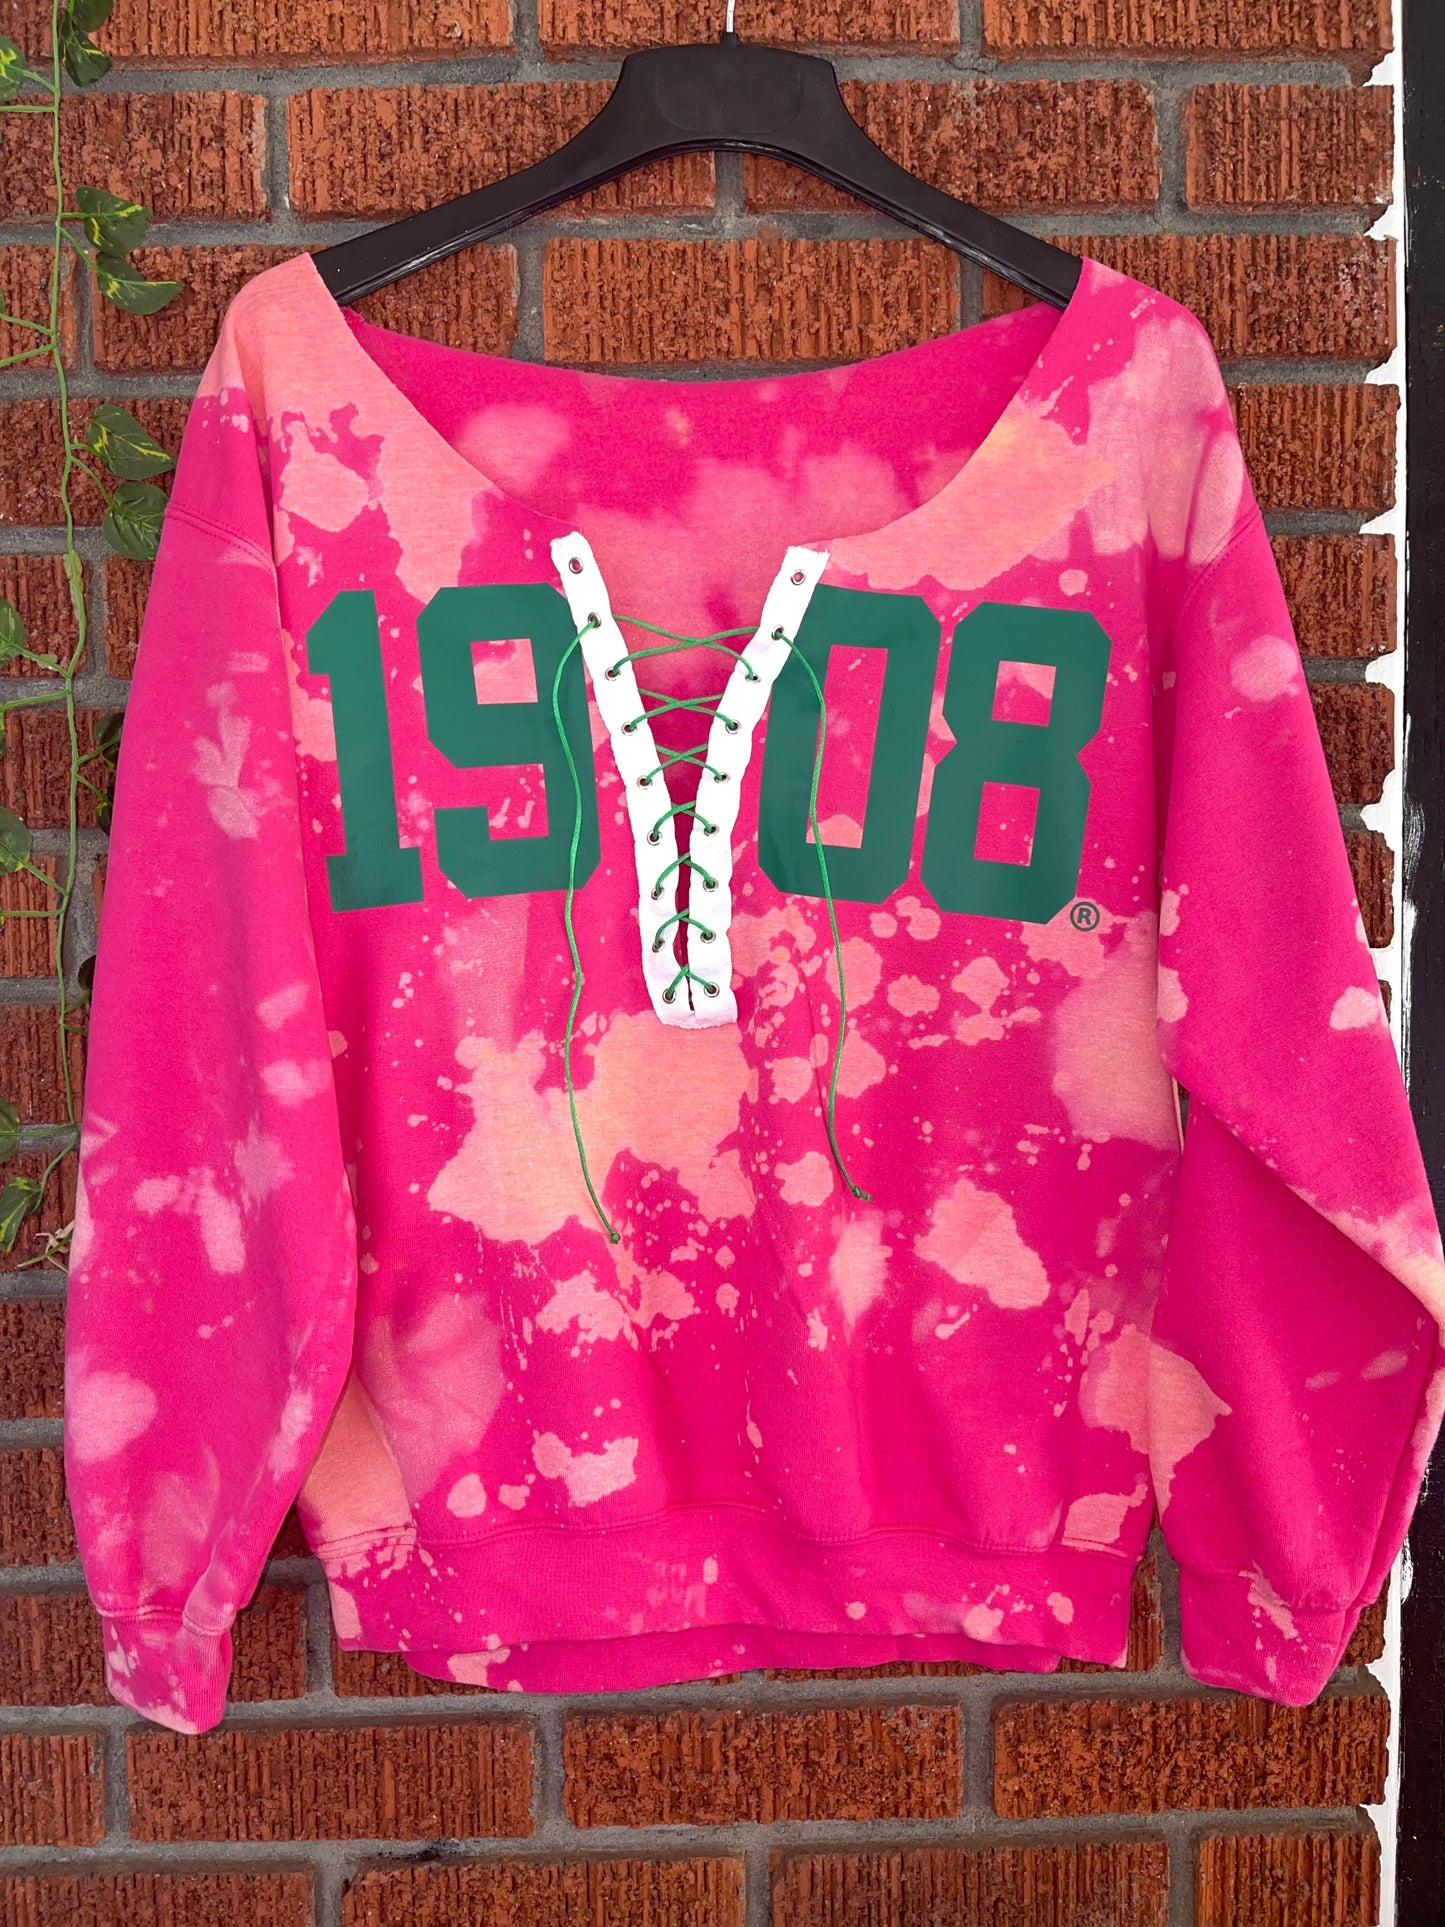 The Handmade 1908 Pink Lace Up Sweatshirt - ccldesignsusa - AKA Alpha Kappa Alpha Pink and Green handmade hand bleach tie dye